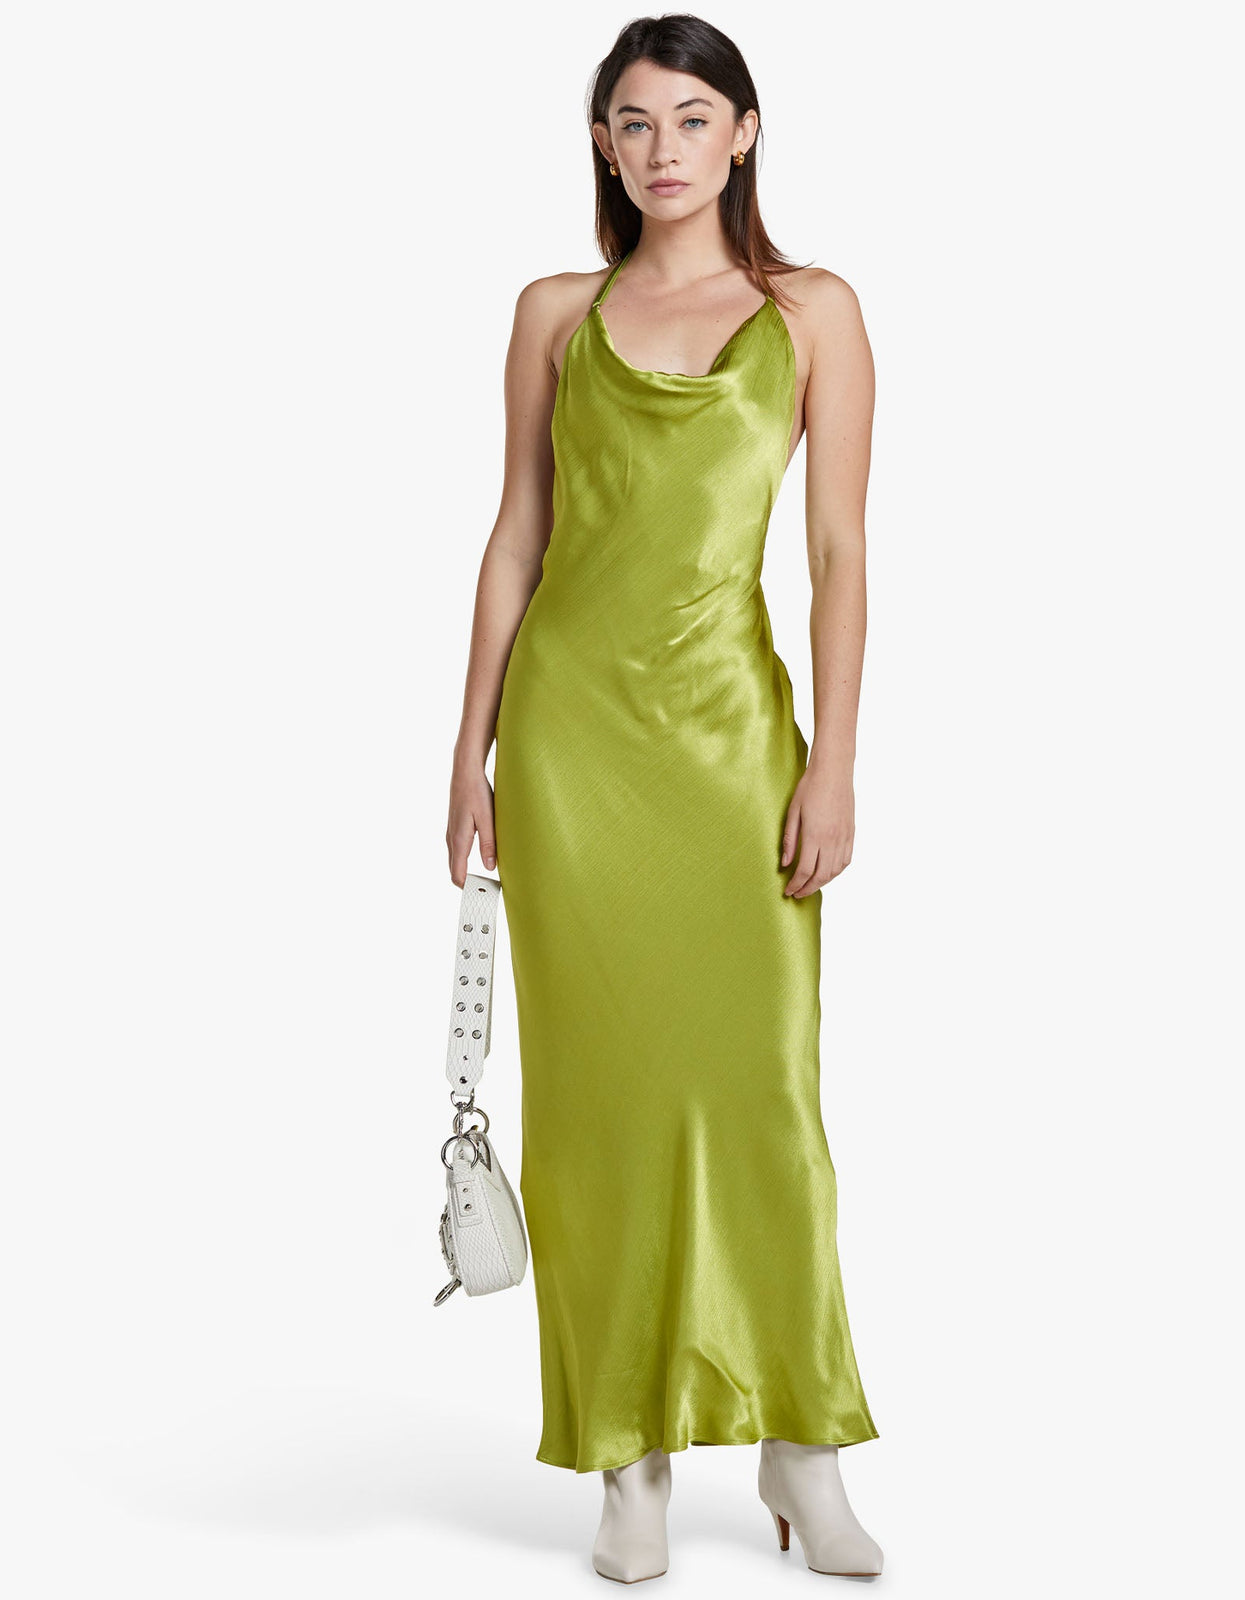 Superette | Odessa Halter Dress - Chartreuse Green